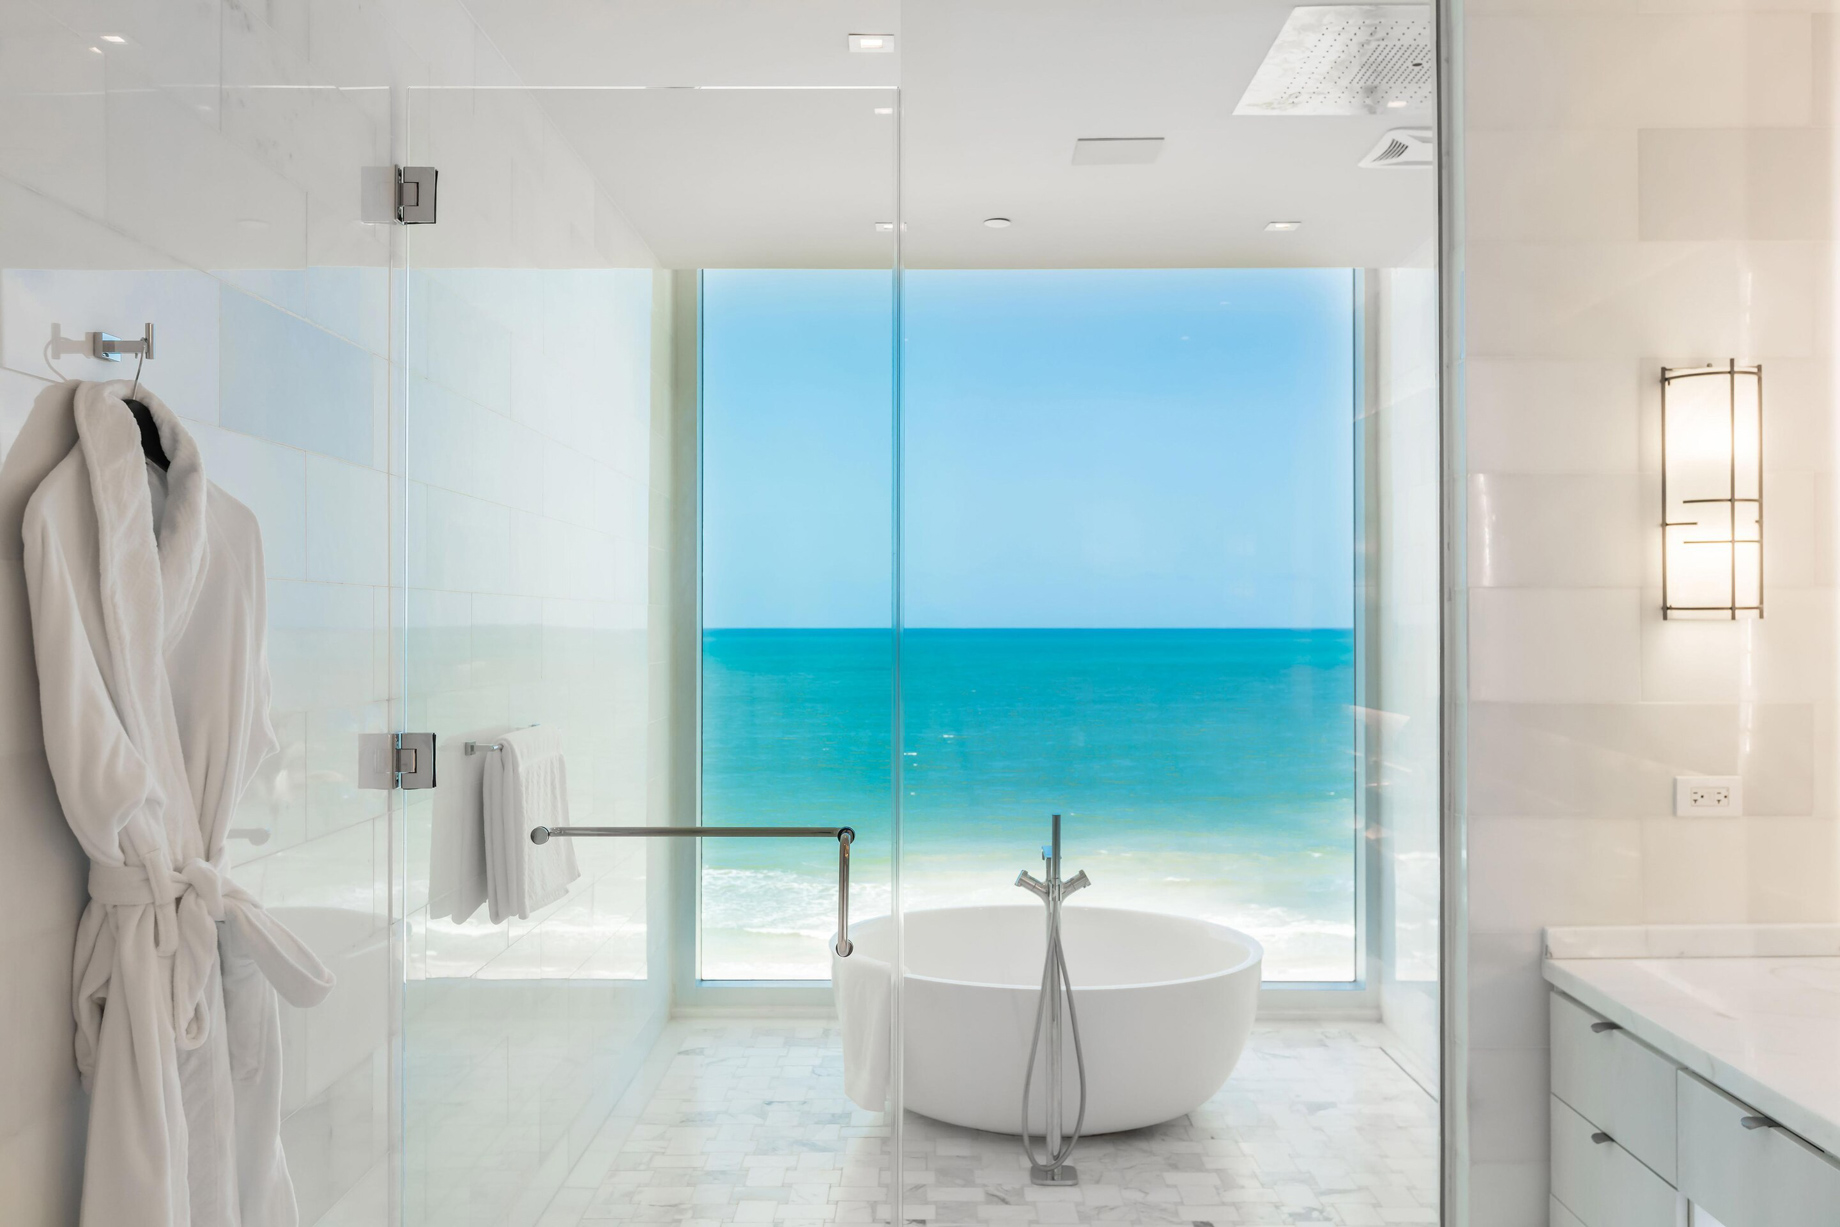 The St. Regis Bahia Beach Resort – Rio Grande, Puerto Rico – Ocean Drive Residences Master Shower and Tub